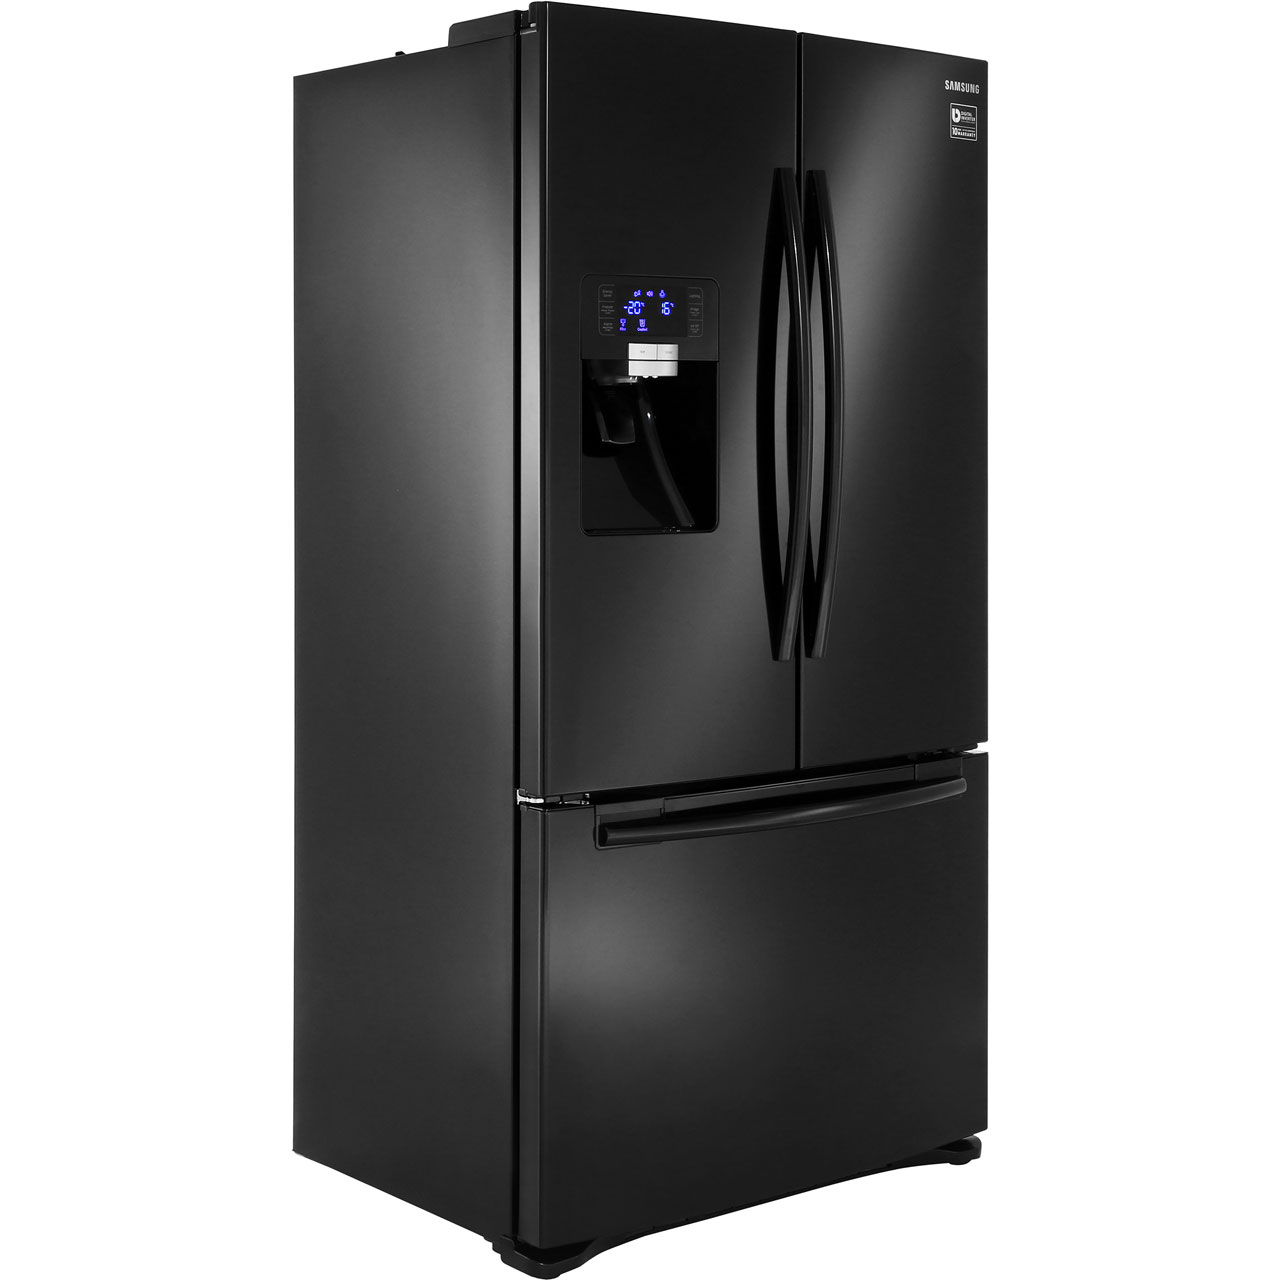 Samsung G-Series RFG23UEBP American Fridge Freezer - Black